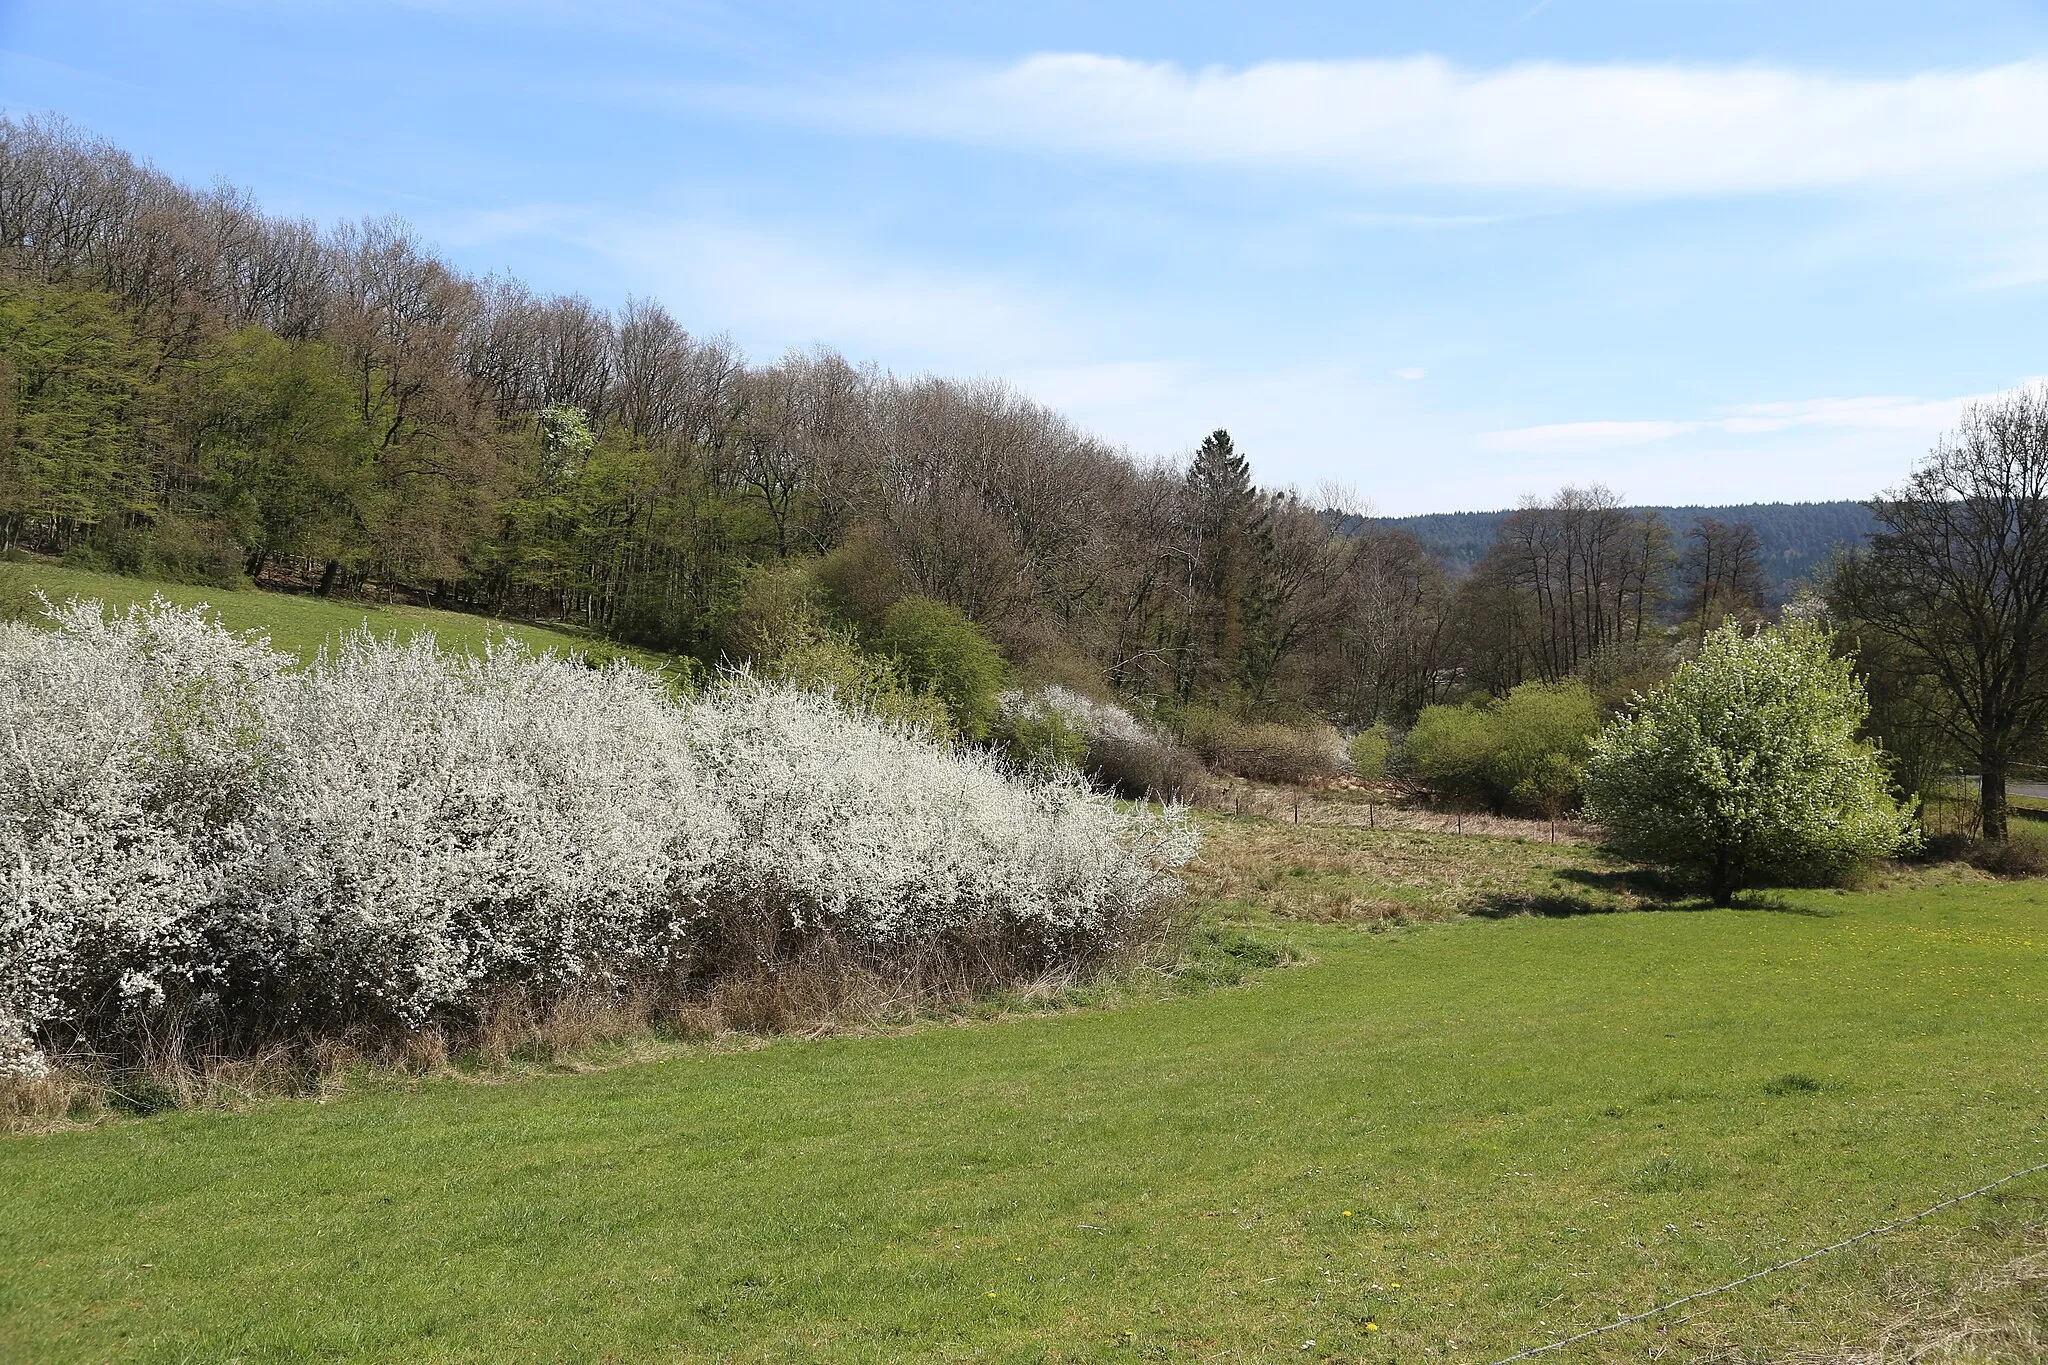 Photo showing: Nature reserve "Schoenecker Schweiz", Rhineland-Palatia, Germany, with Sloeblossoms (Prunus spinosa)